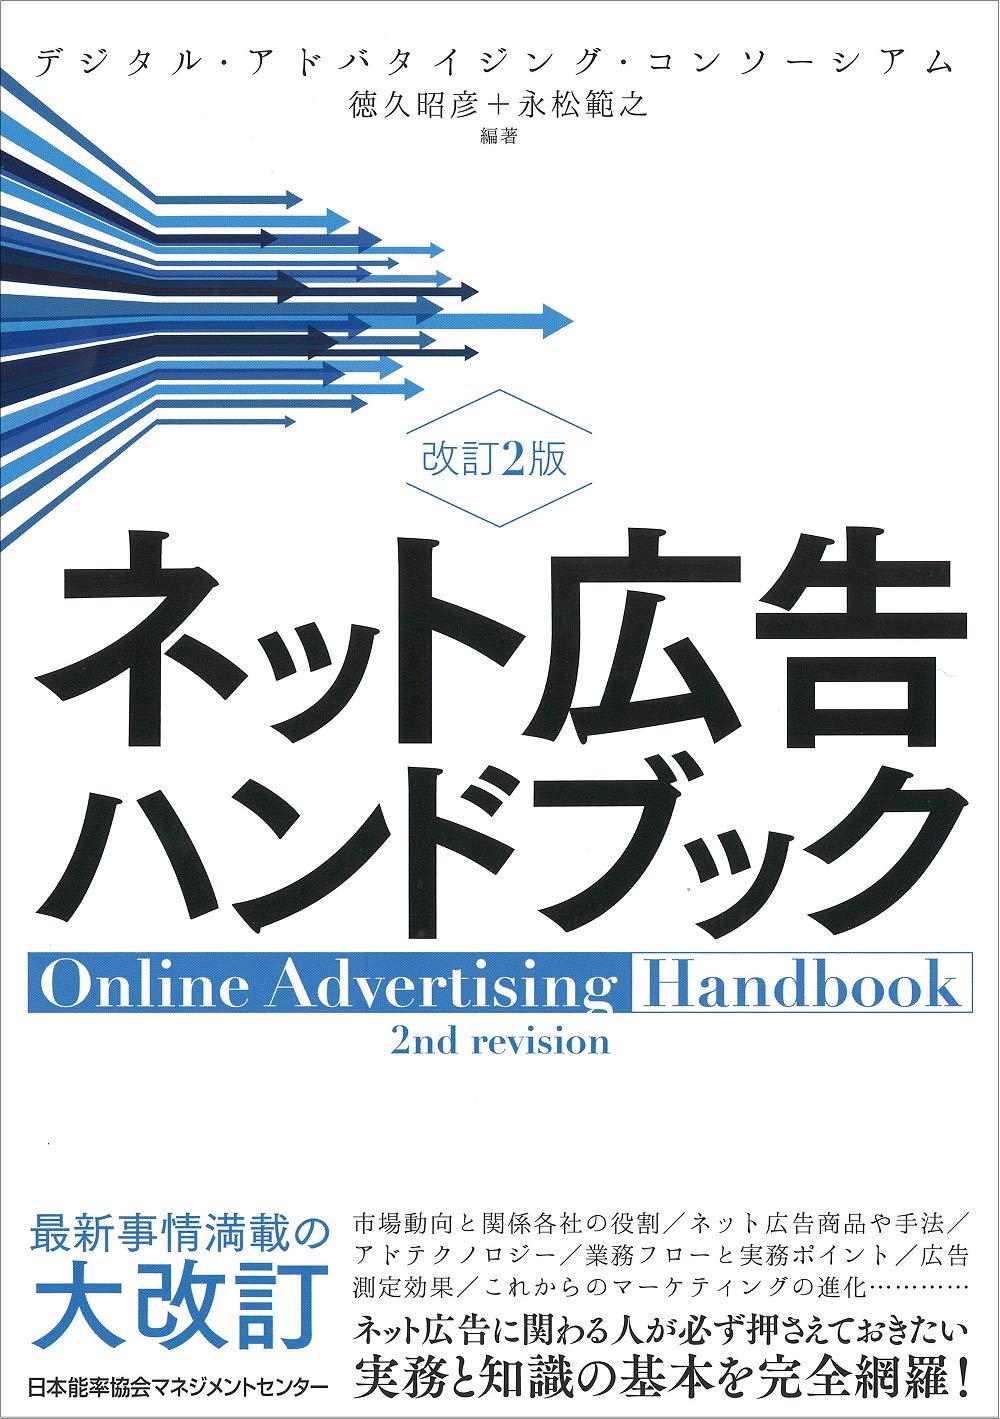 web-content-handbook-1